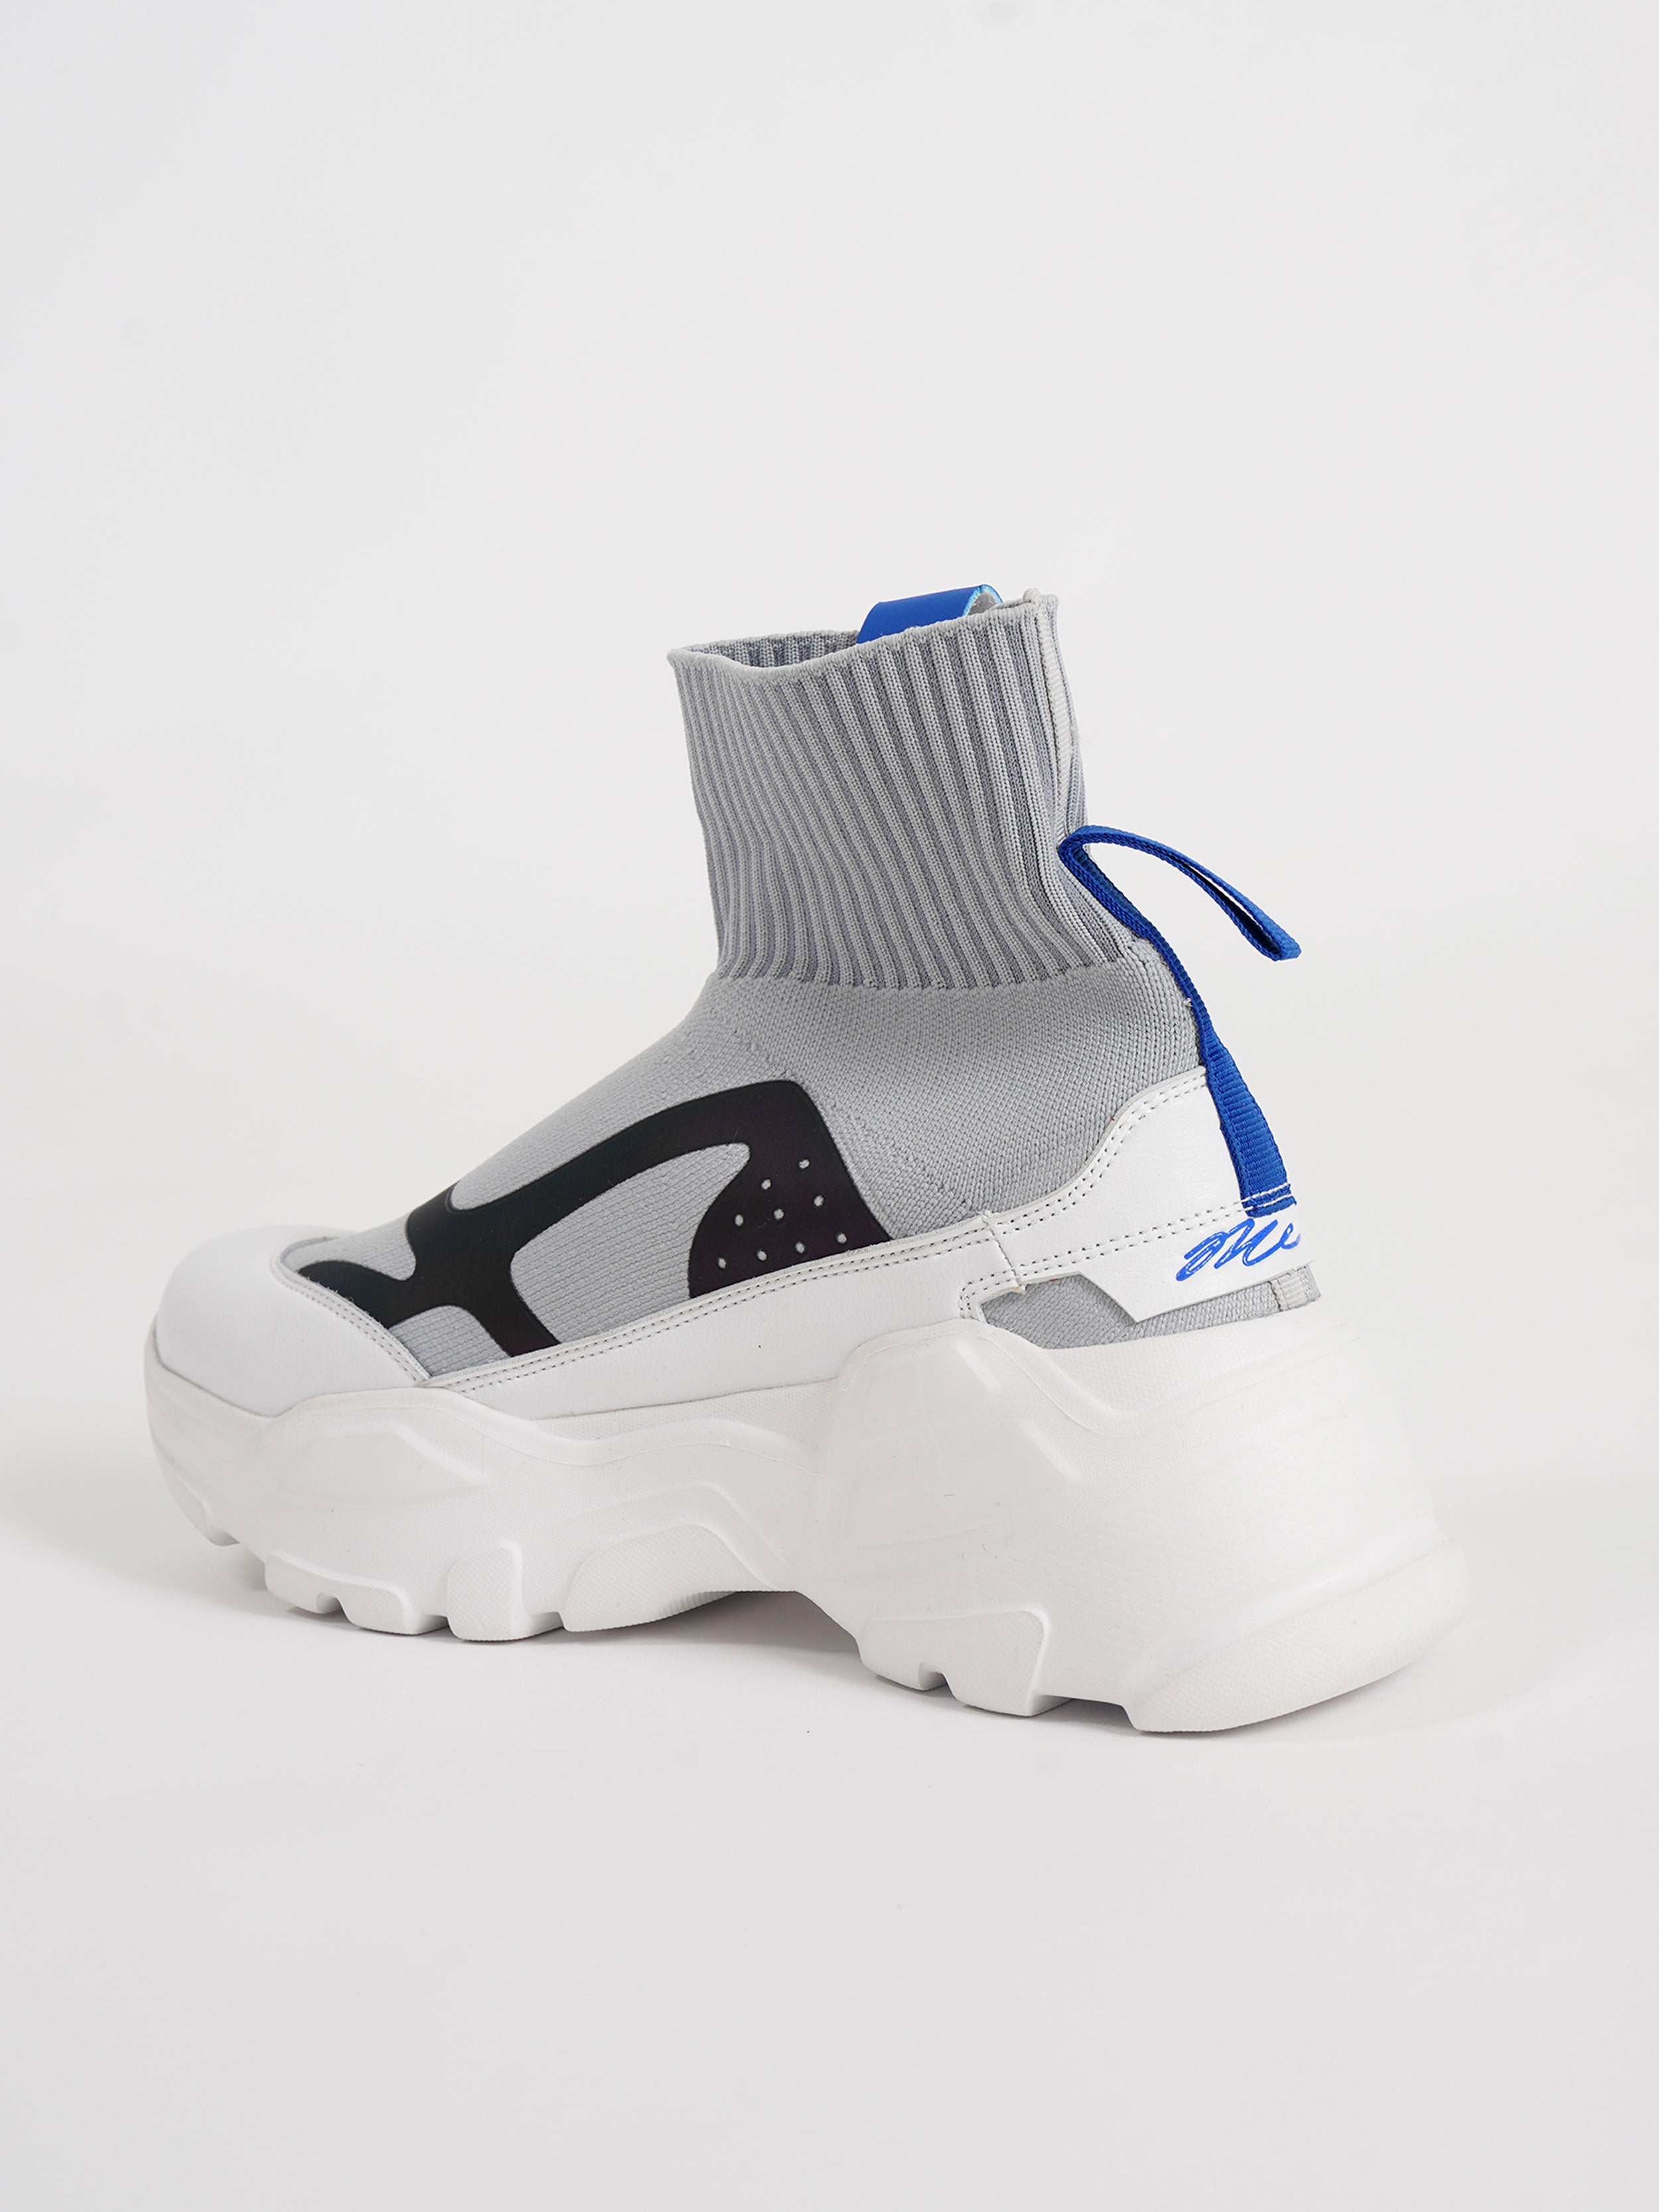 【正規品限定SALE】1017 alyx 9sm knit socks sneaker boot 靴